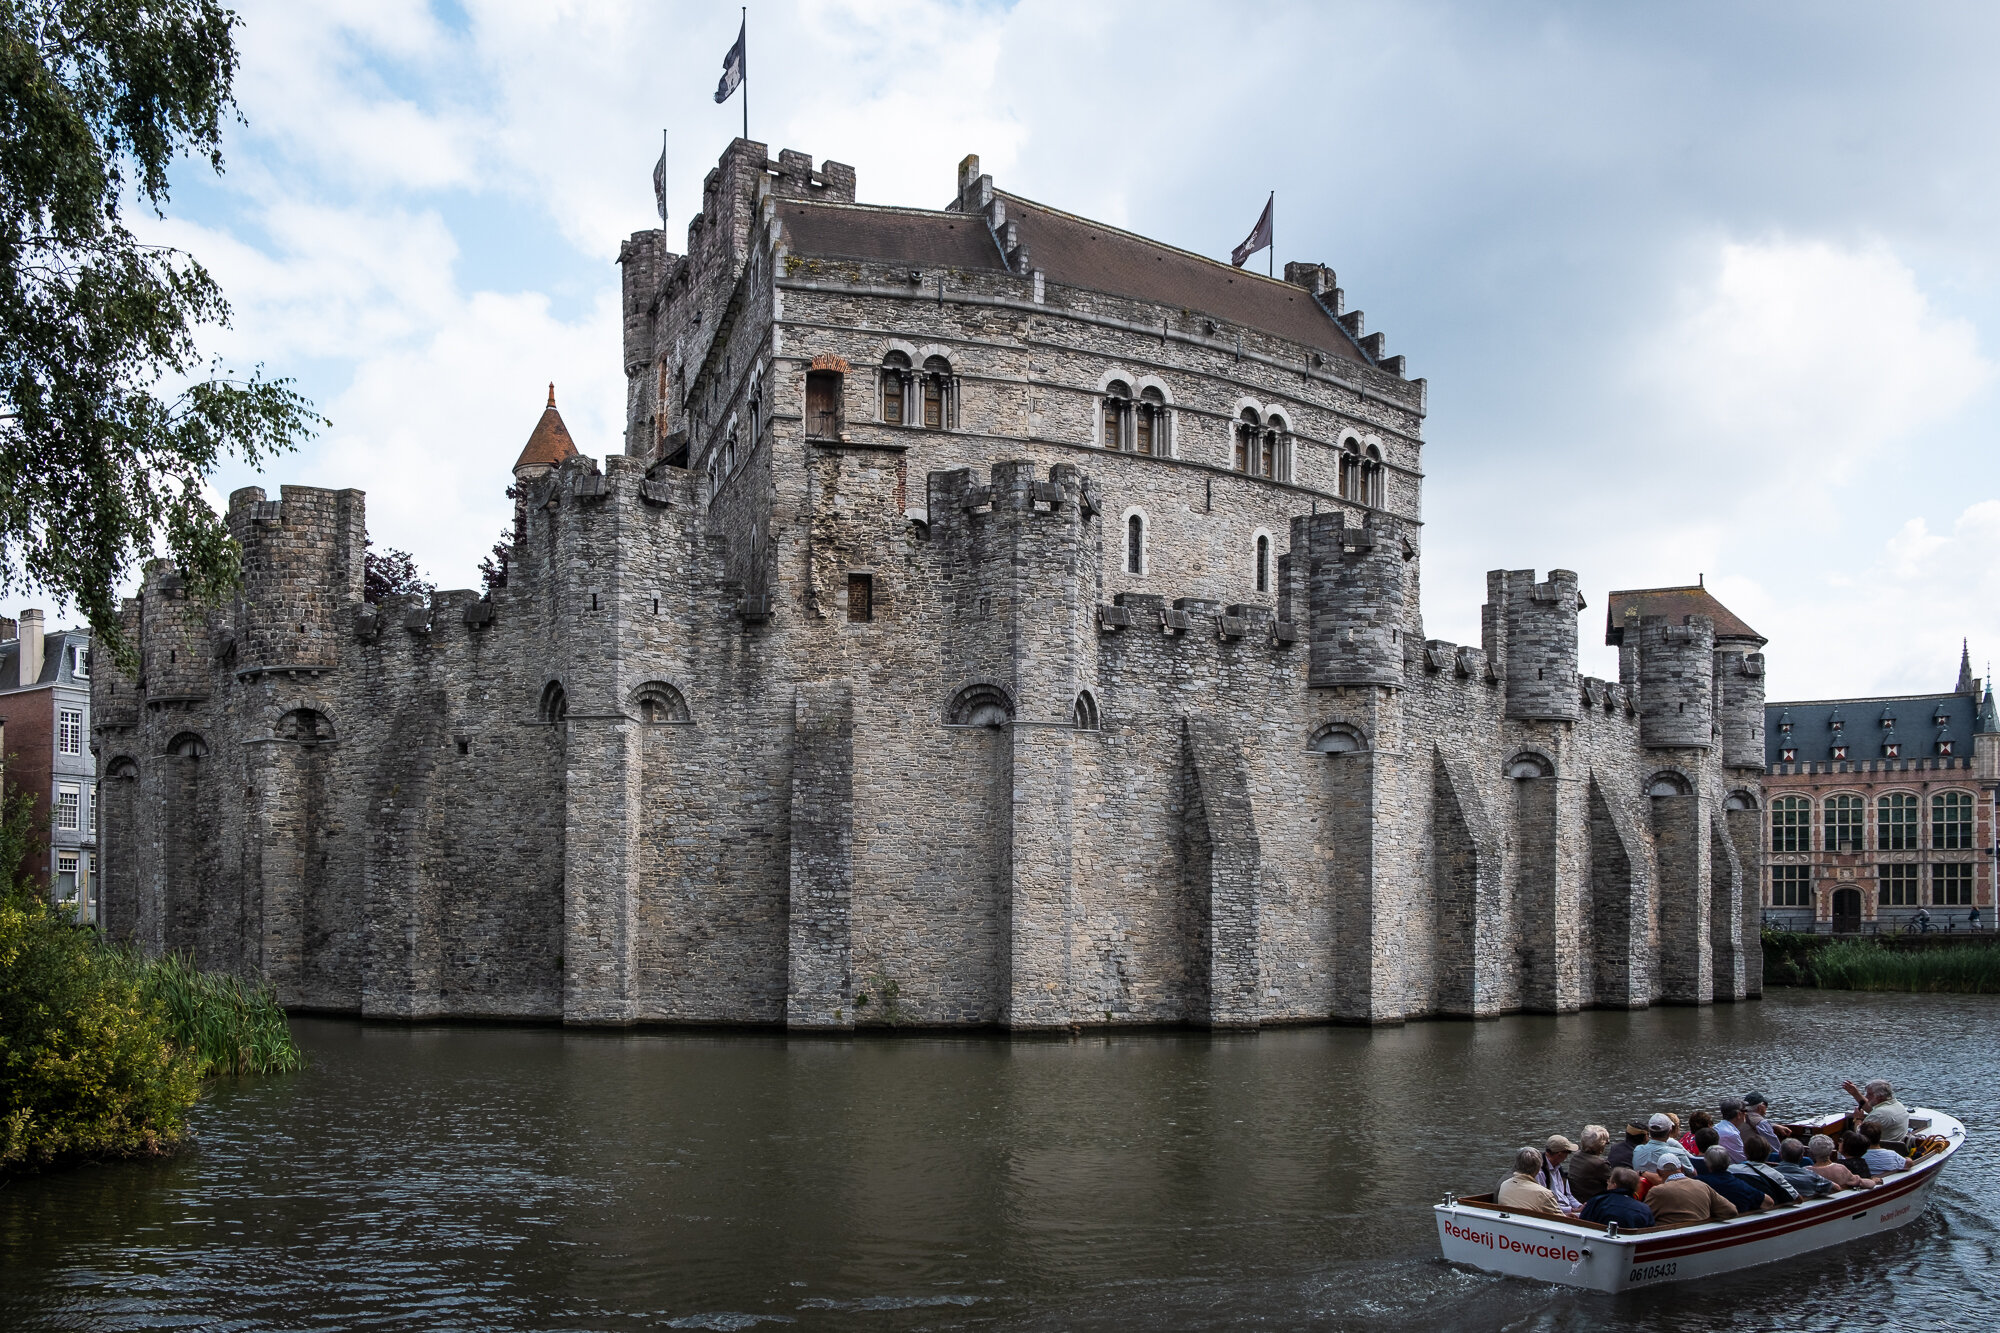 Photo of the Gravensteen Medieval Castle in Ghent taken by Trevor Sherwin